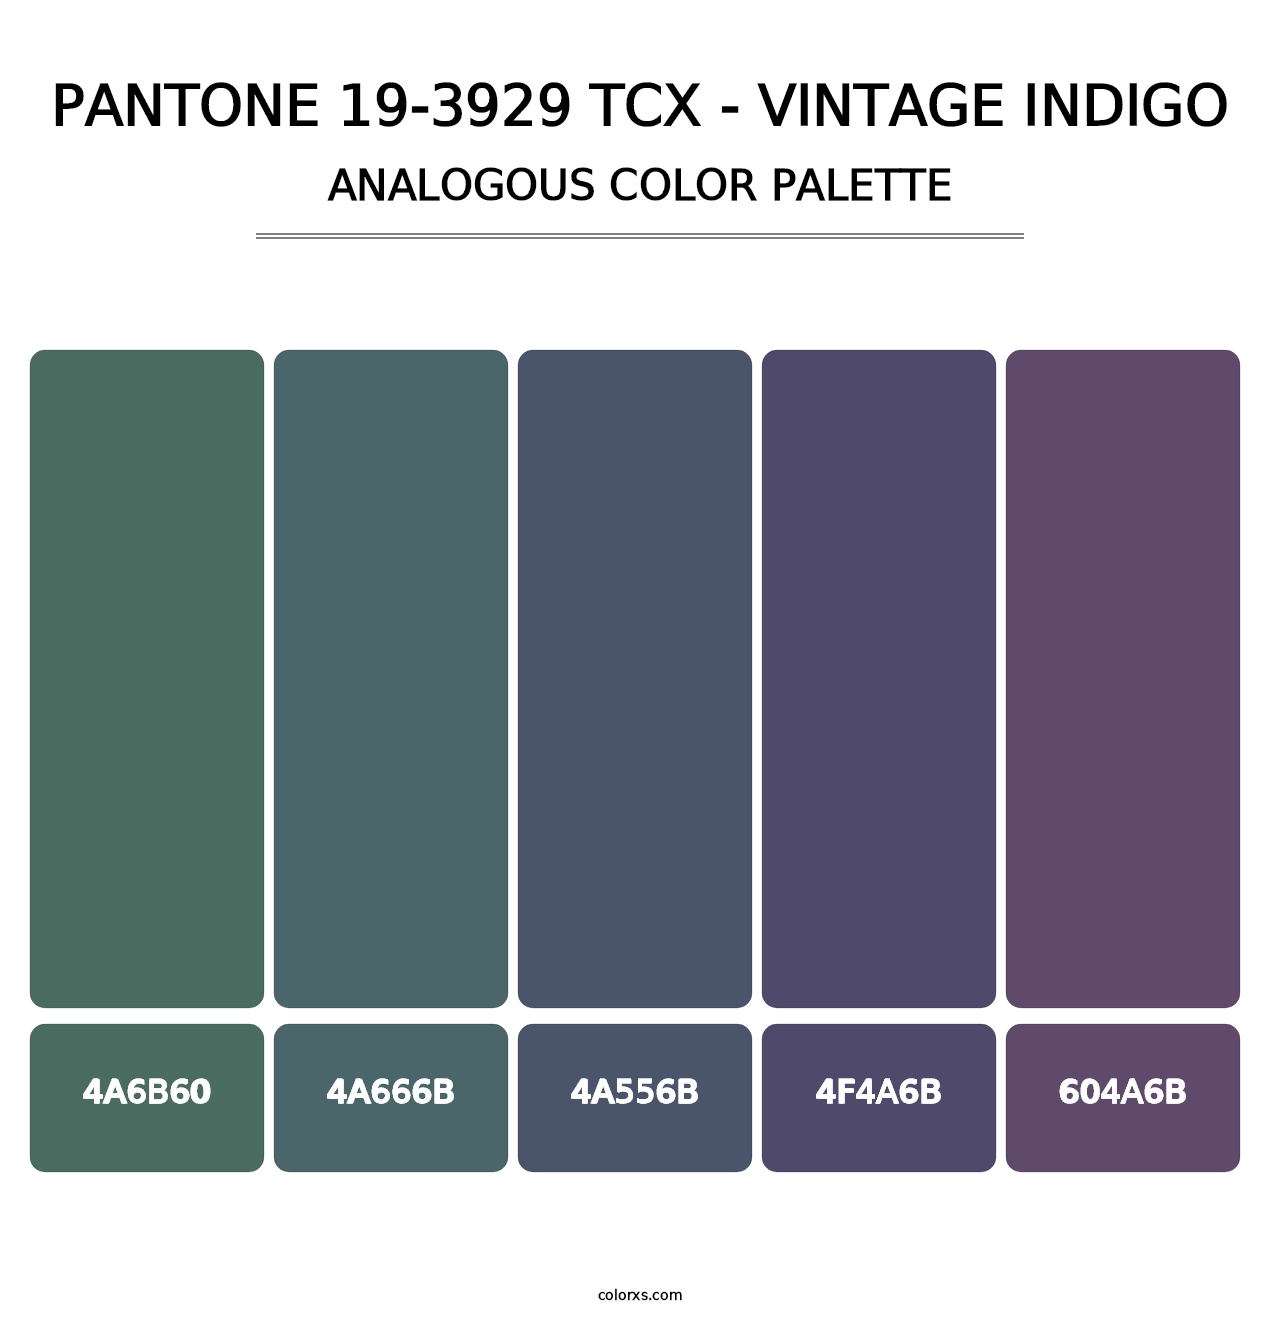 PANTONE 19-3929 TCX - Vintage Indigo - Analogous Color Palette